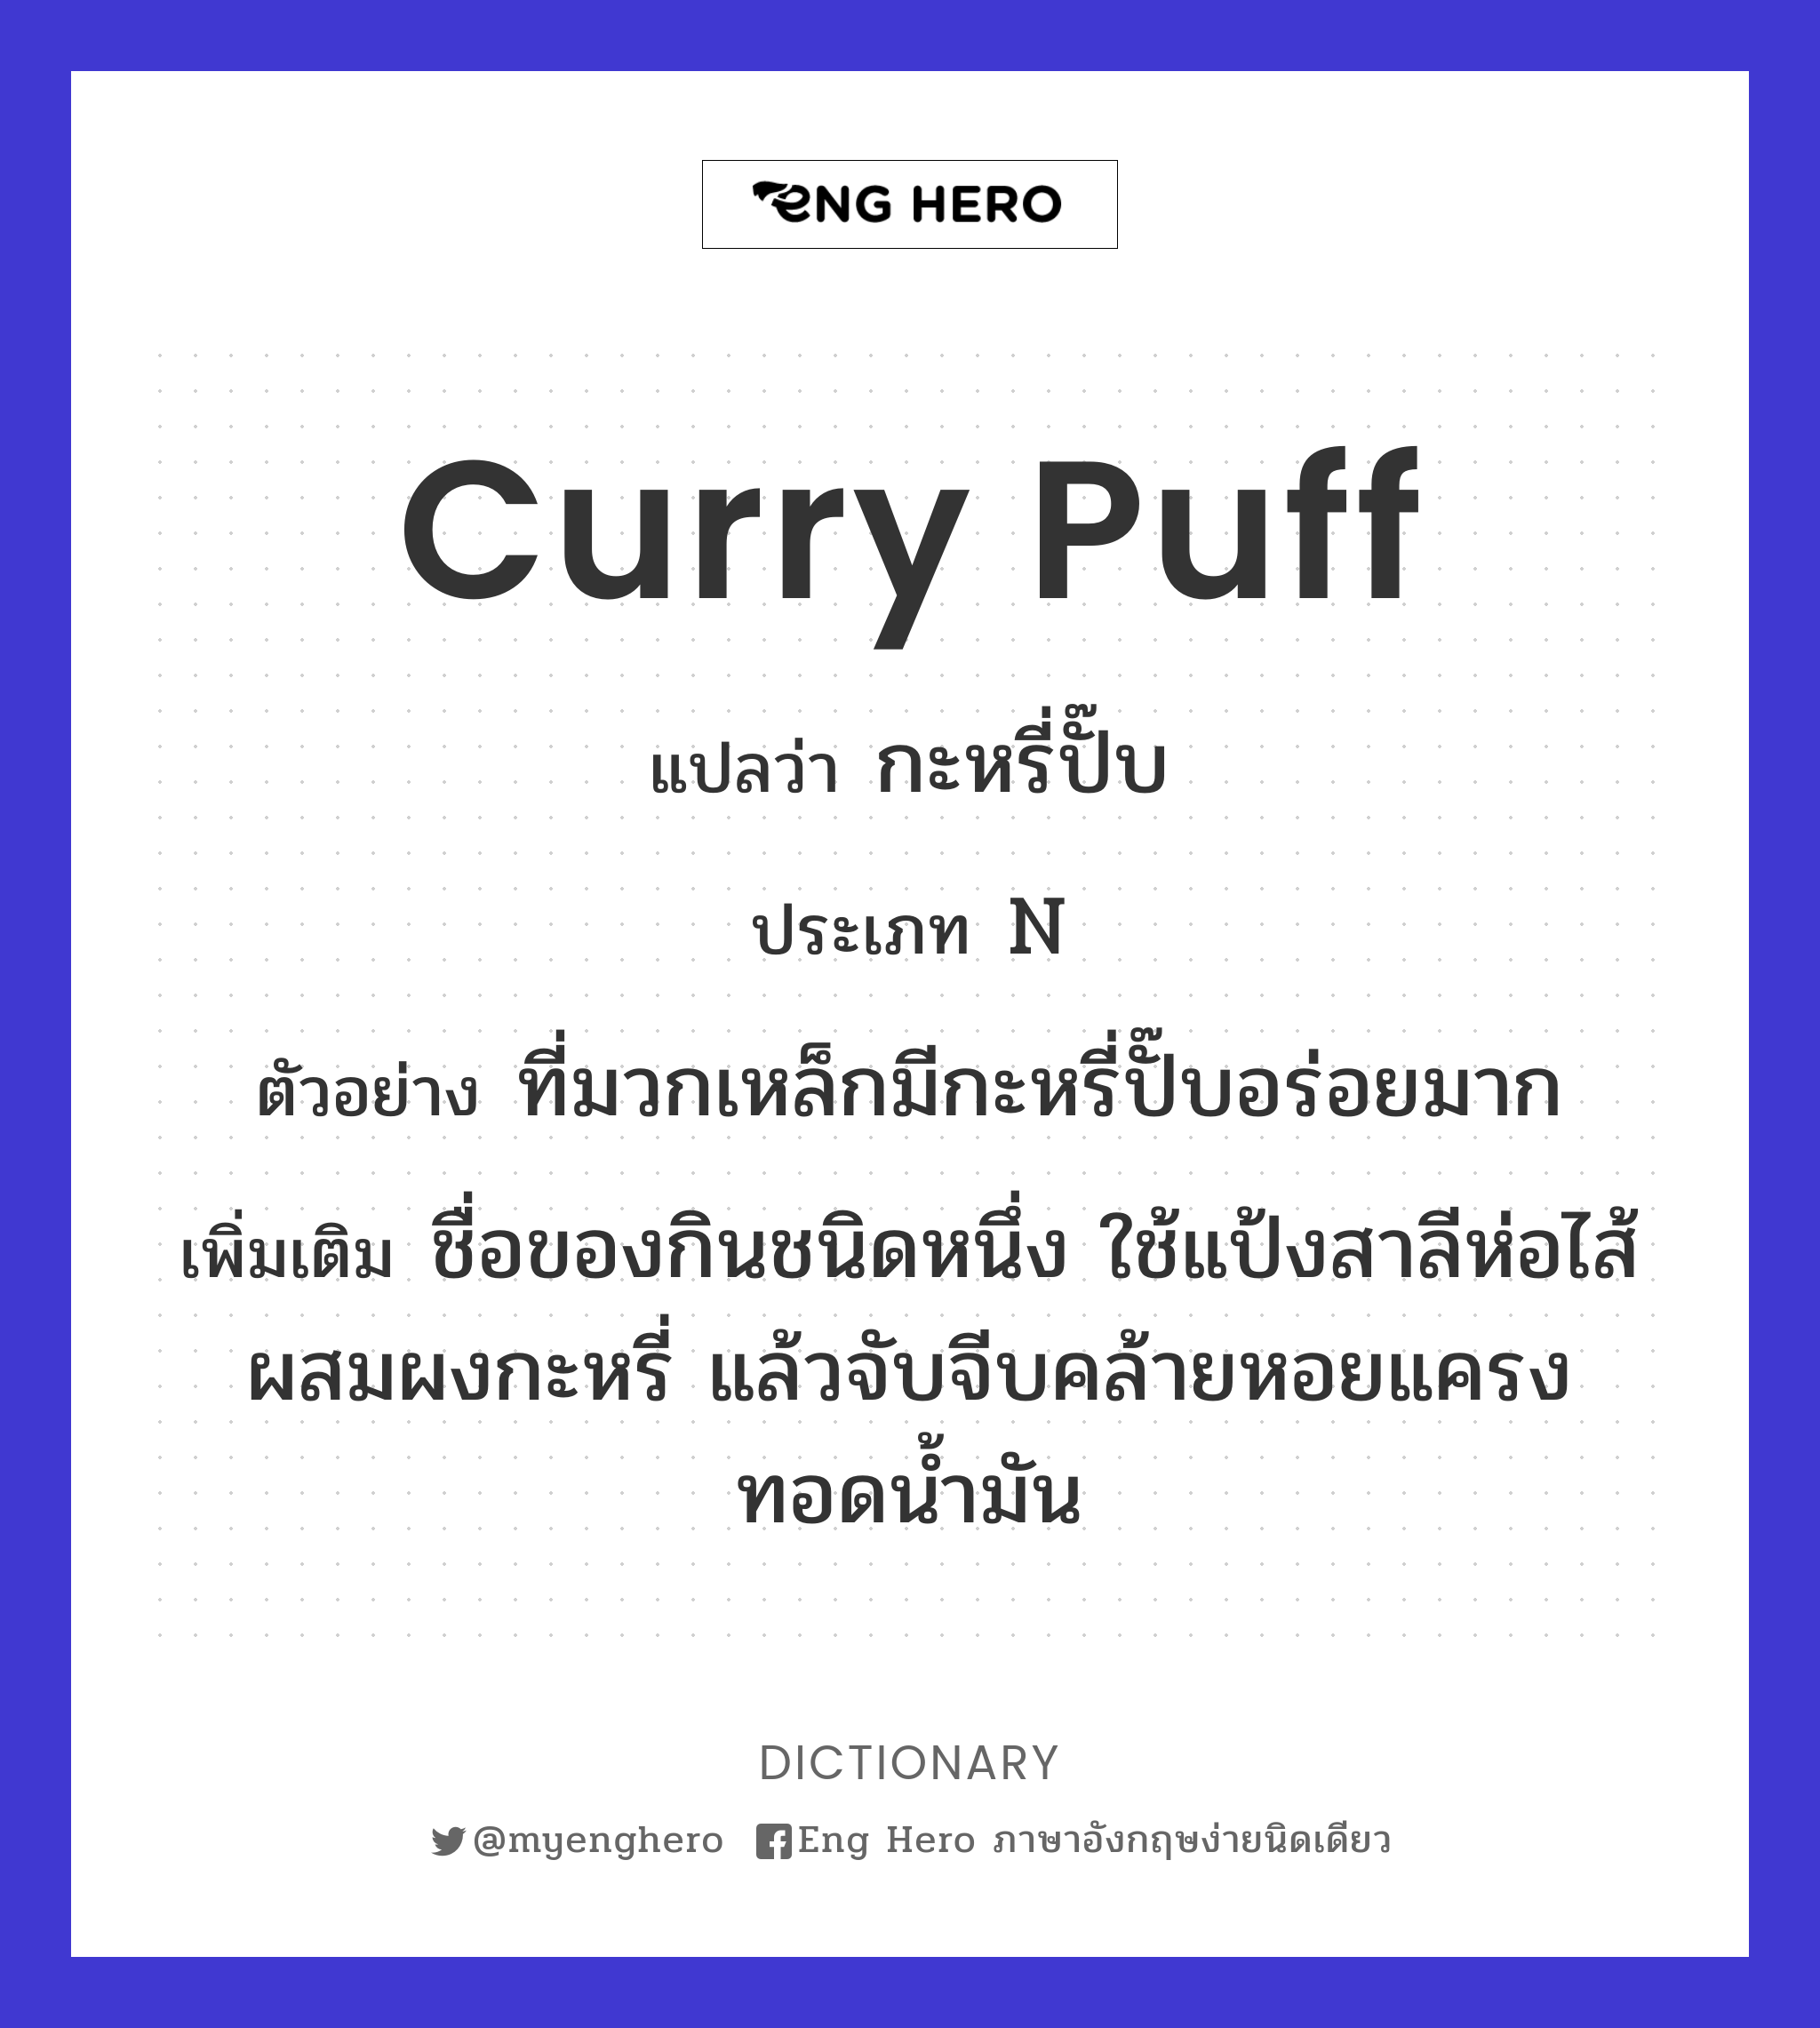 curry puff